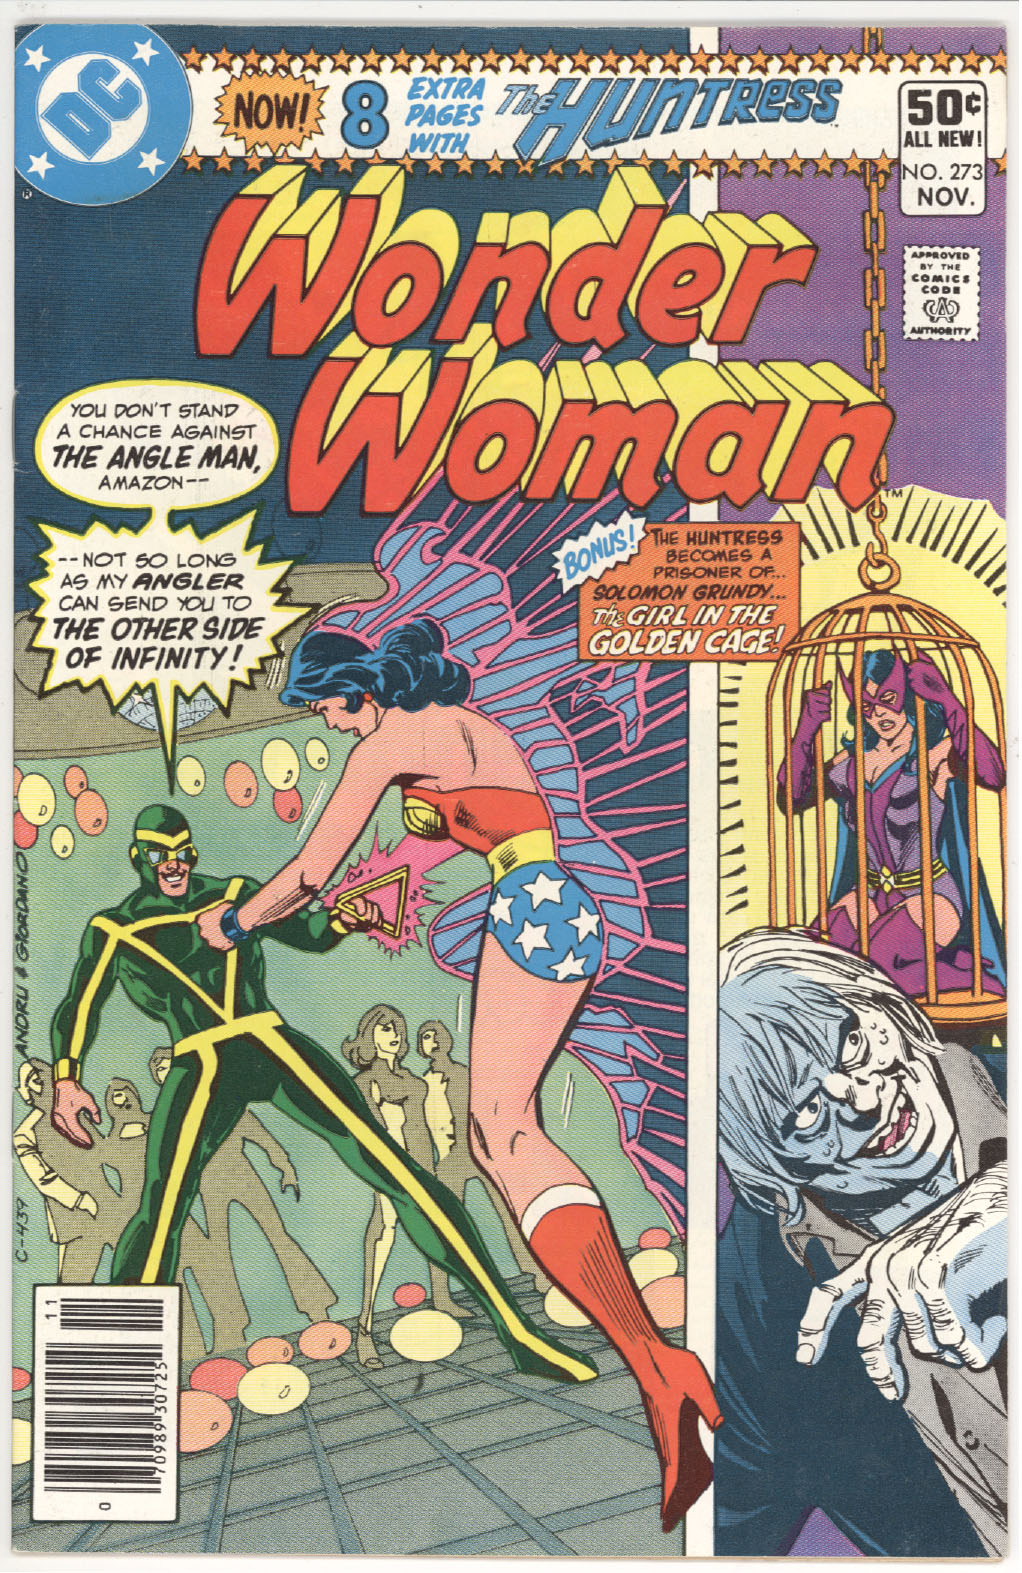 Wonder Woman #273 front